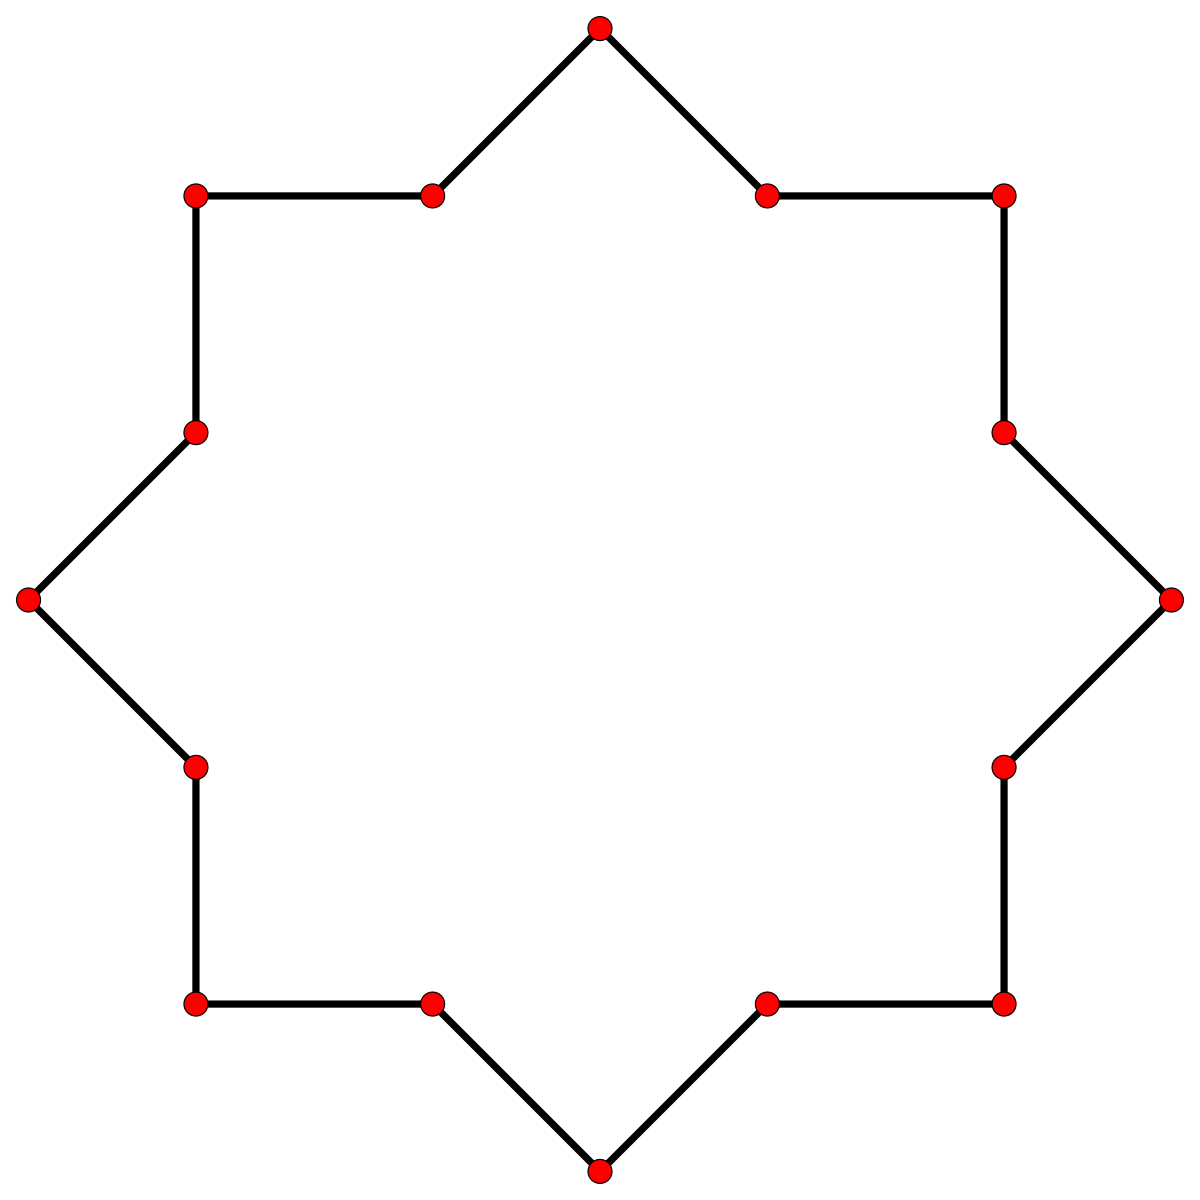 File:Squared octagonal-star0.svg.